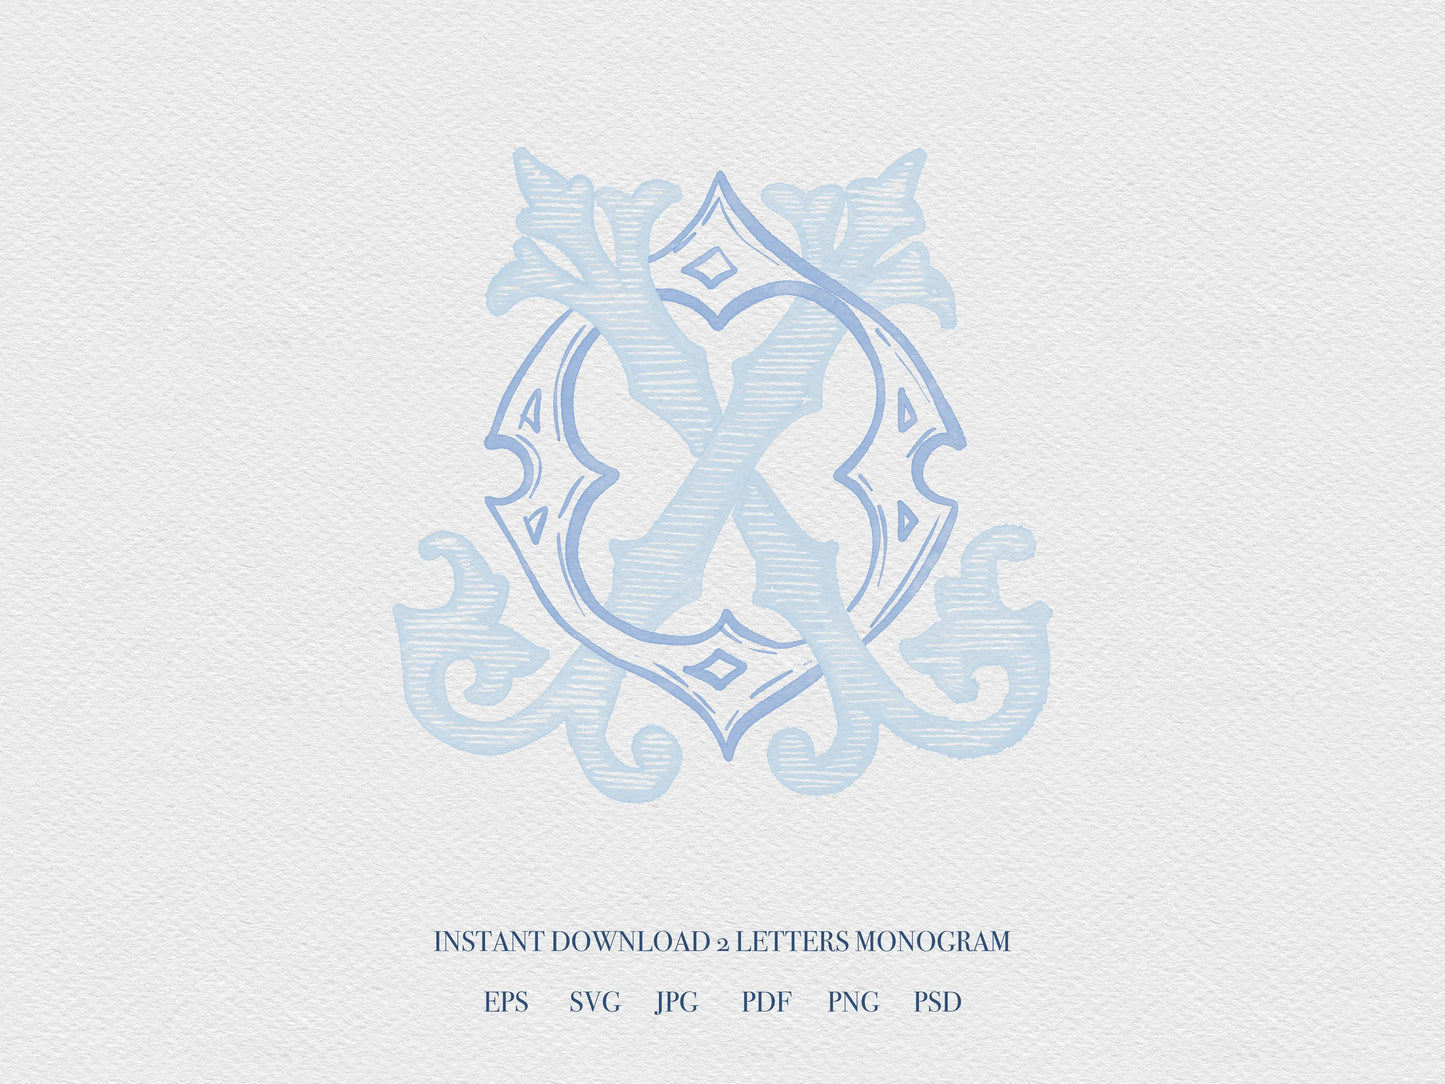 2 Letter Monogram with Letters OX | Digital Download - Wedding Monogram SVG, Personal Logo, Wedding Logo for Wedding Invitations The Wedding Crest Lab